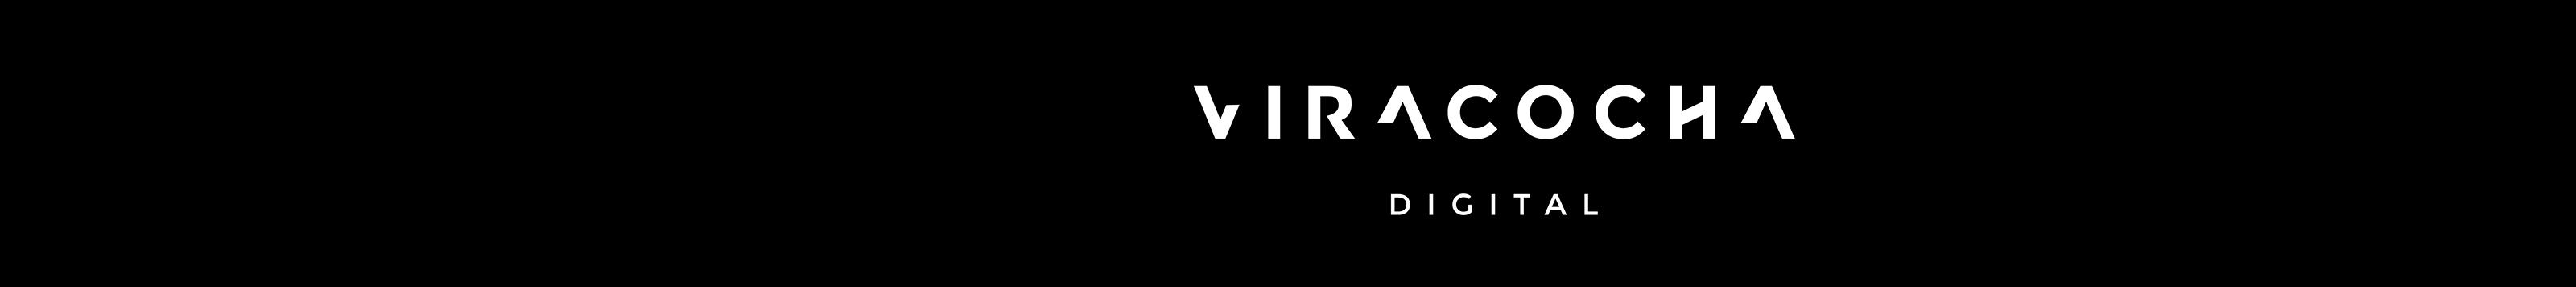 Viracocha Digital's profile banner